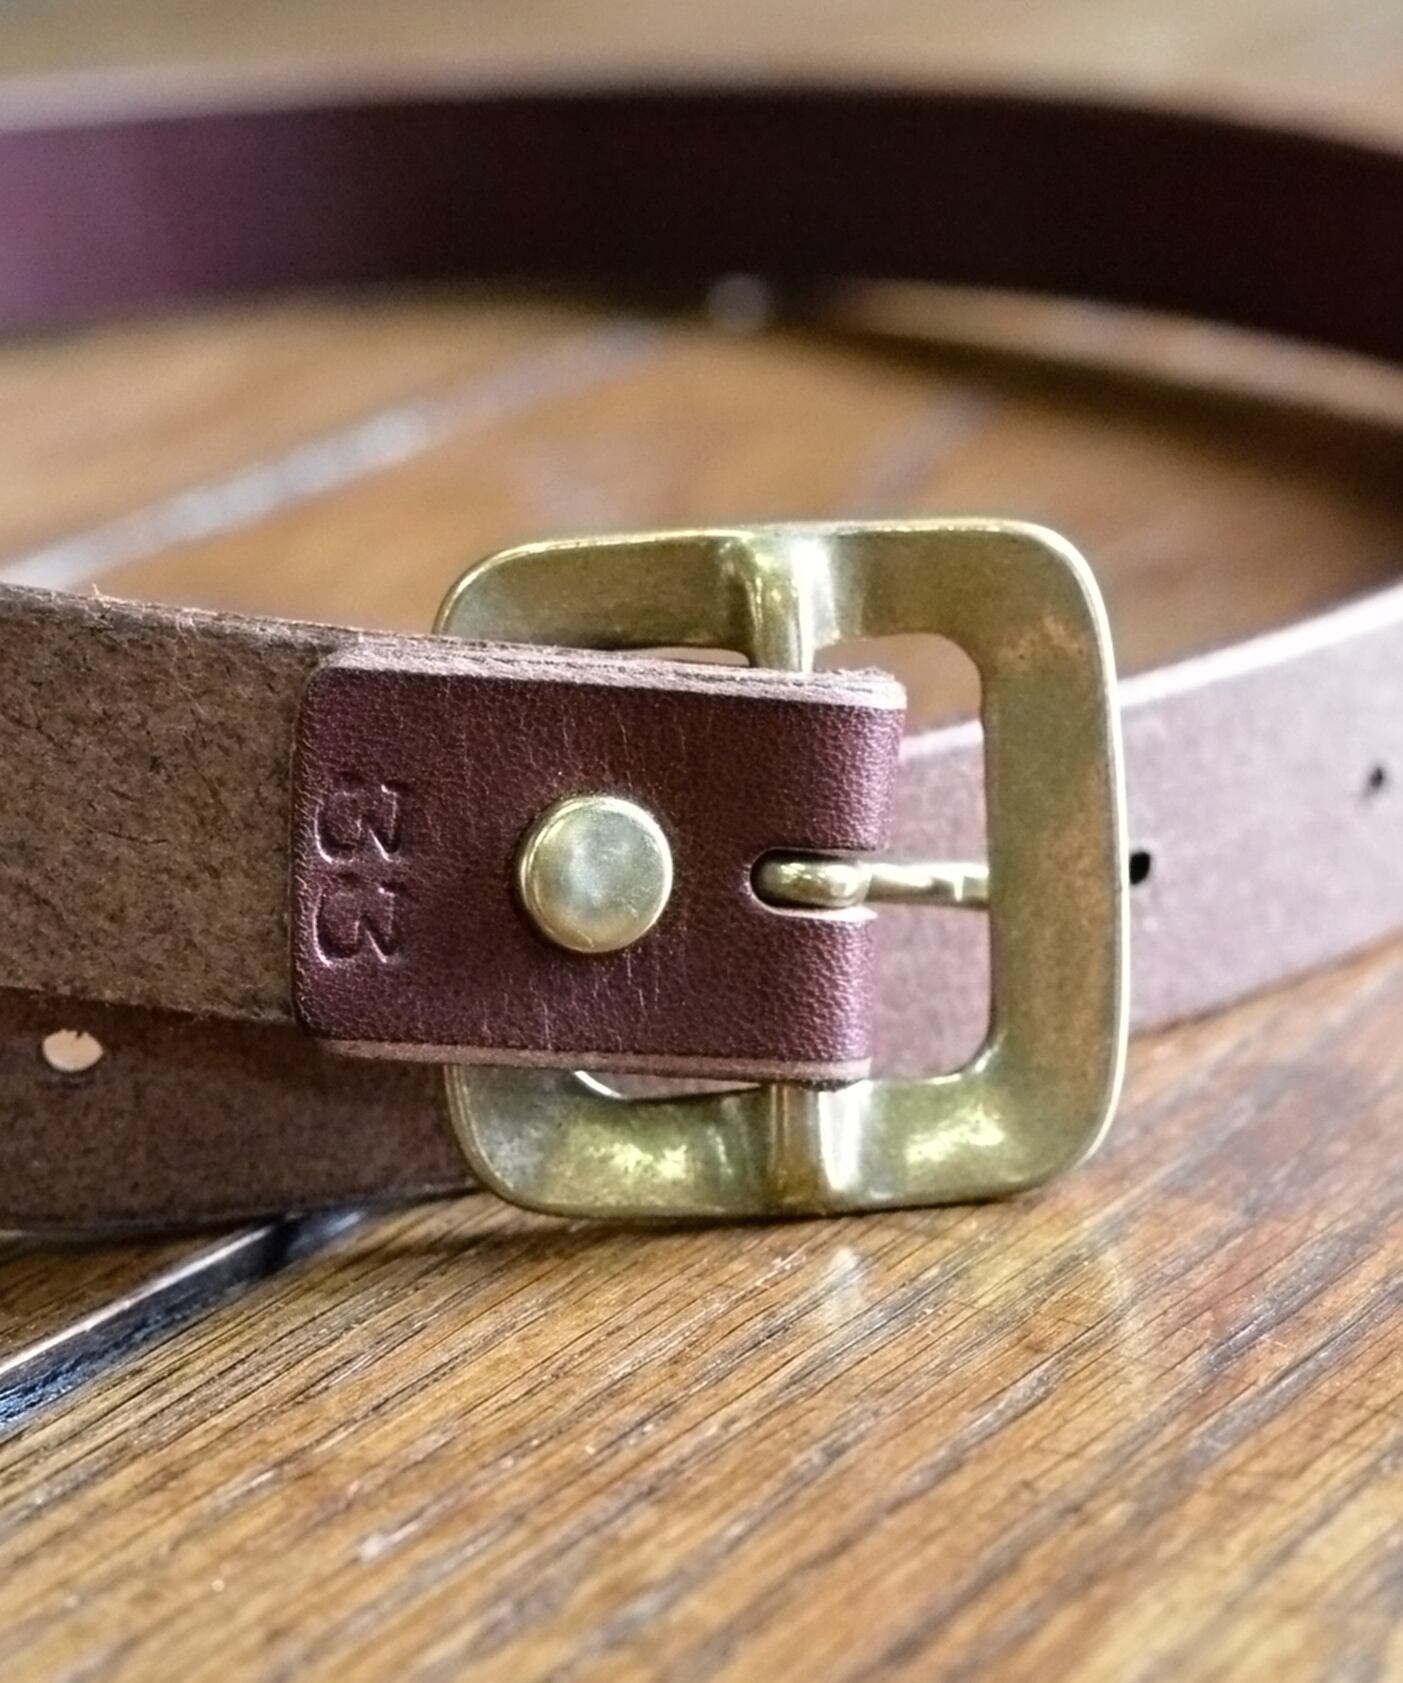 Dady】leather narrow belt (green) dros dro